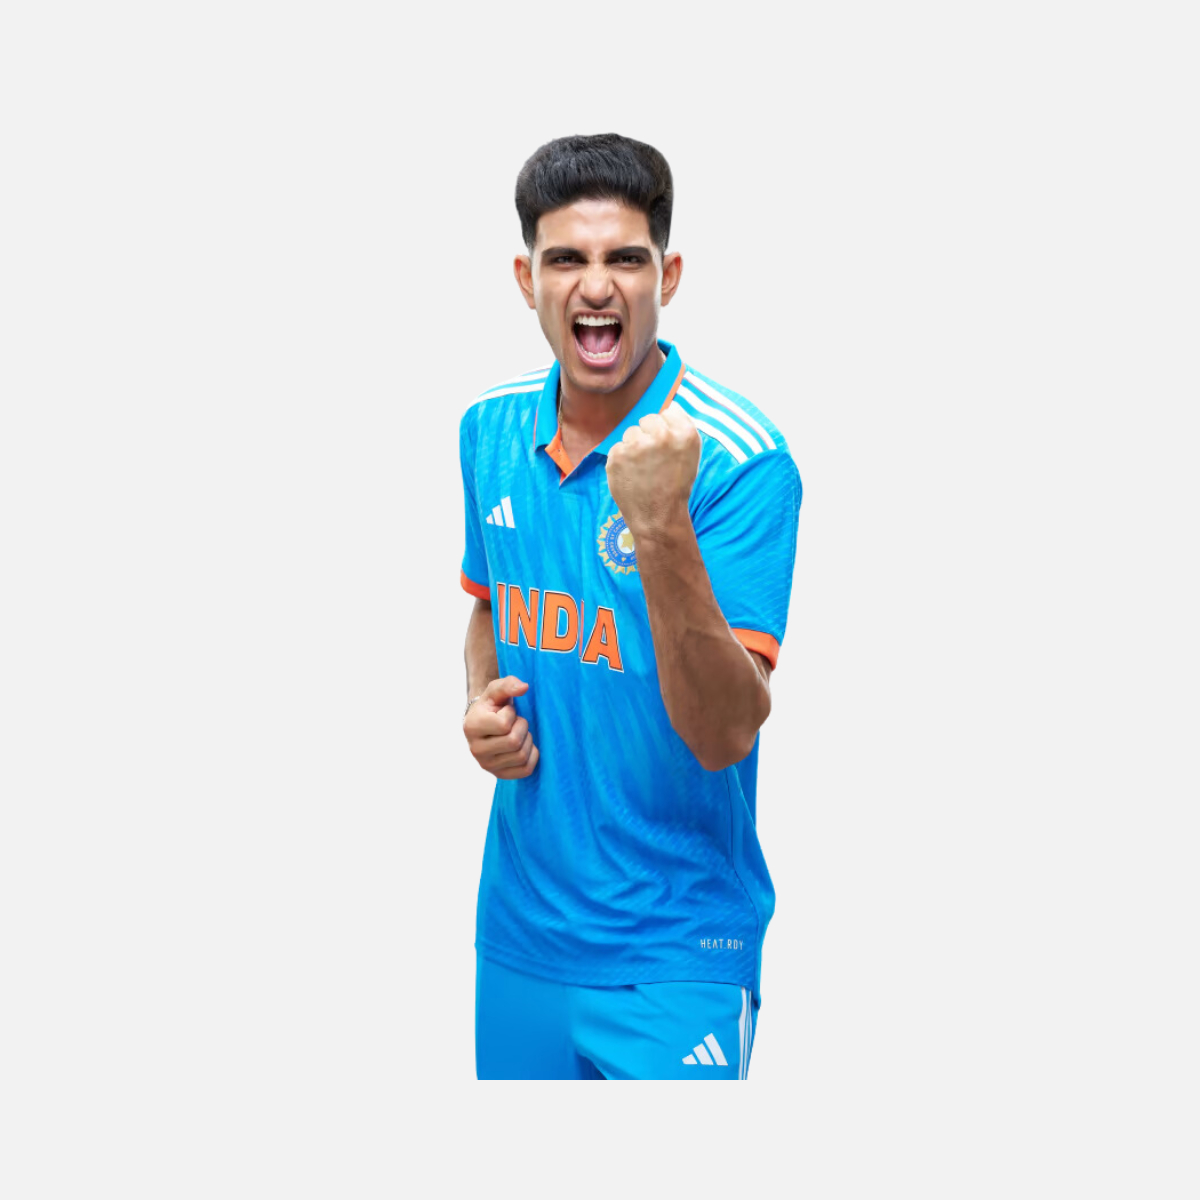 Adidas India Cricket Odi Men's T-shirt -Bright Blue